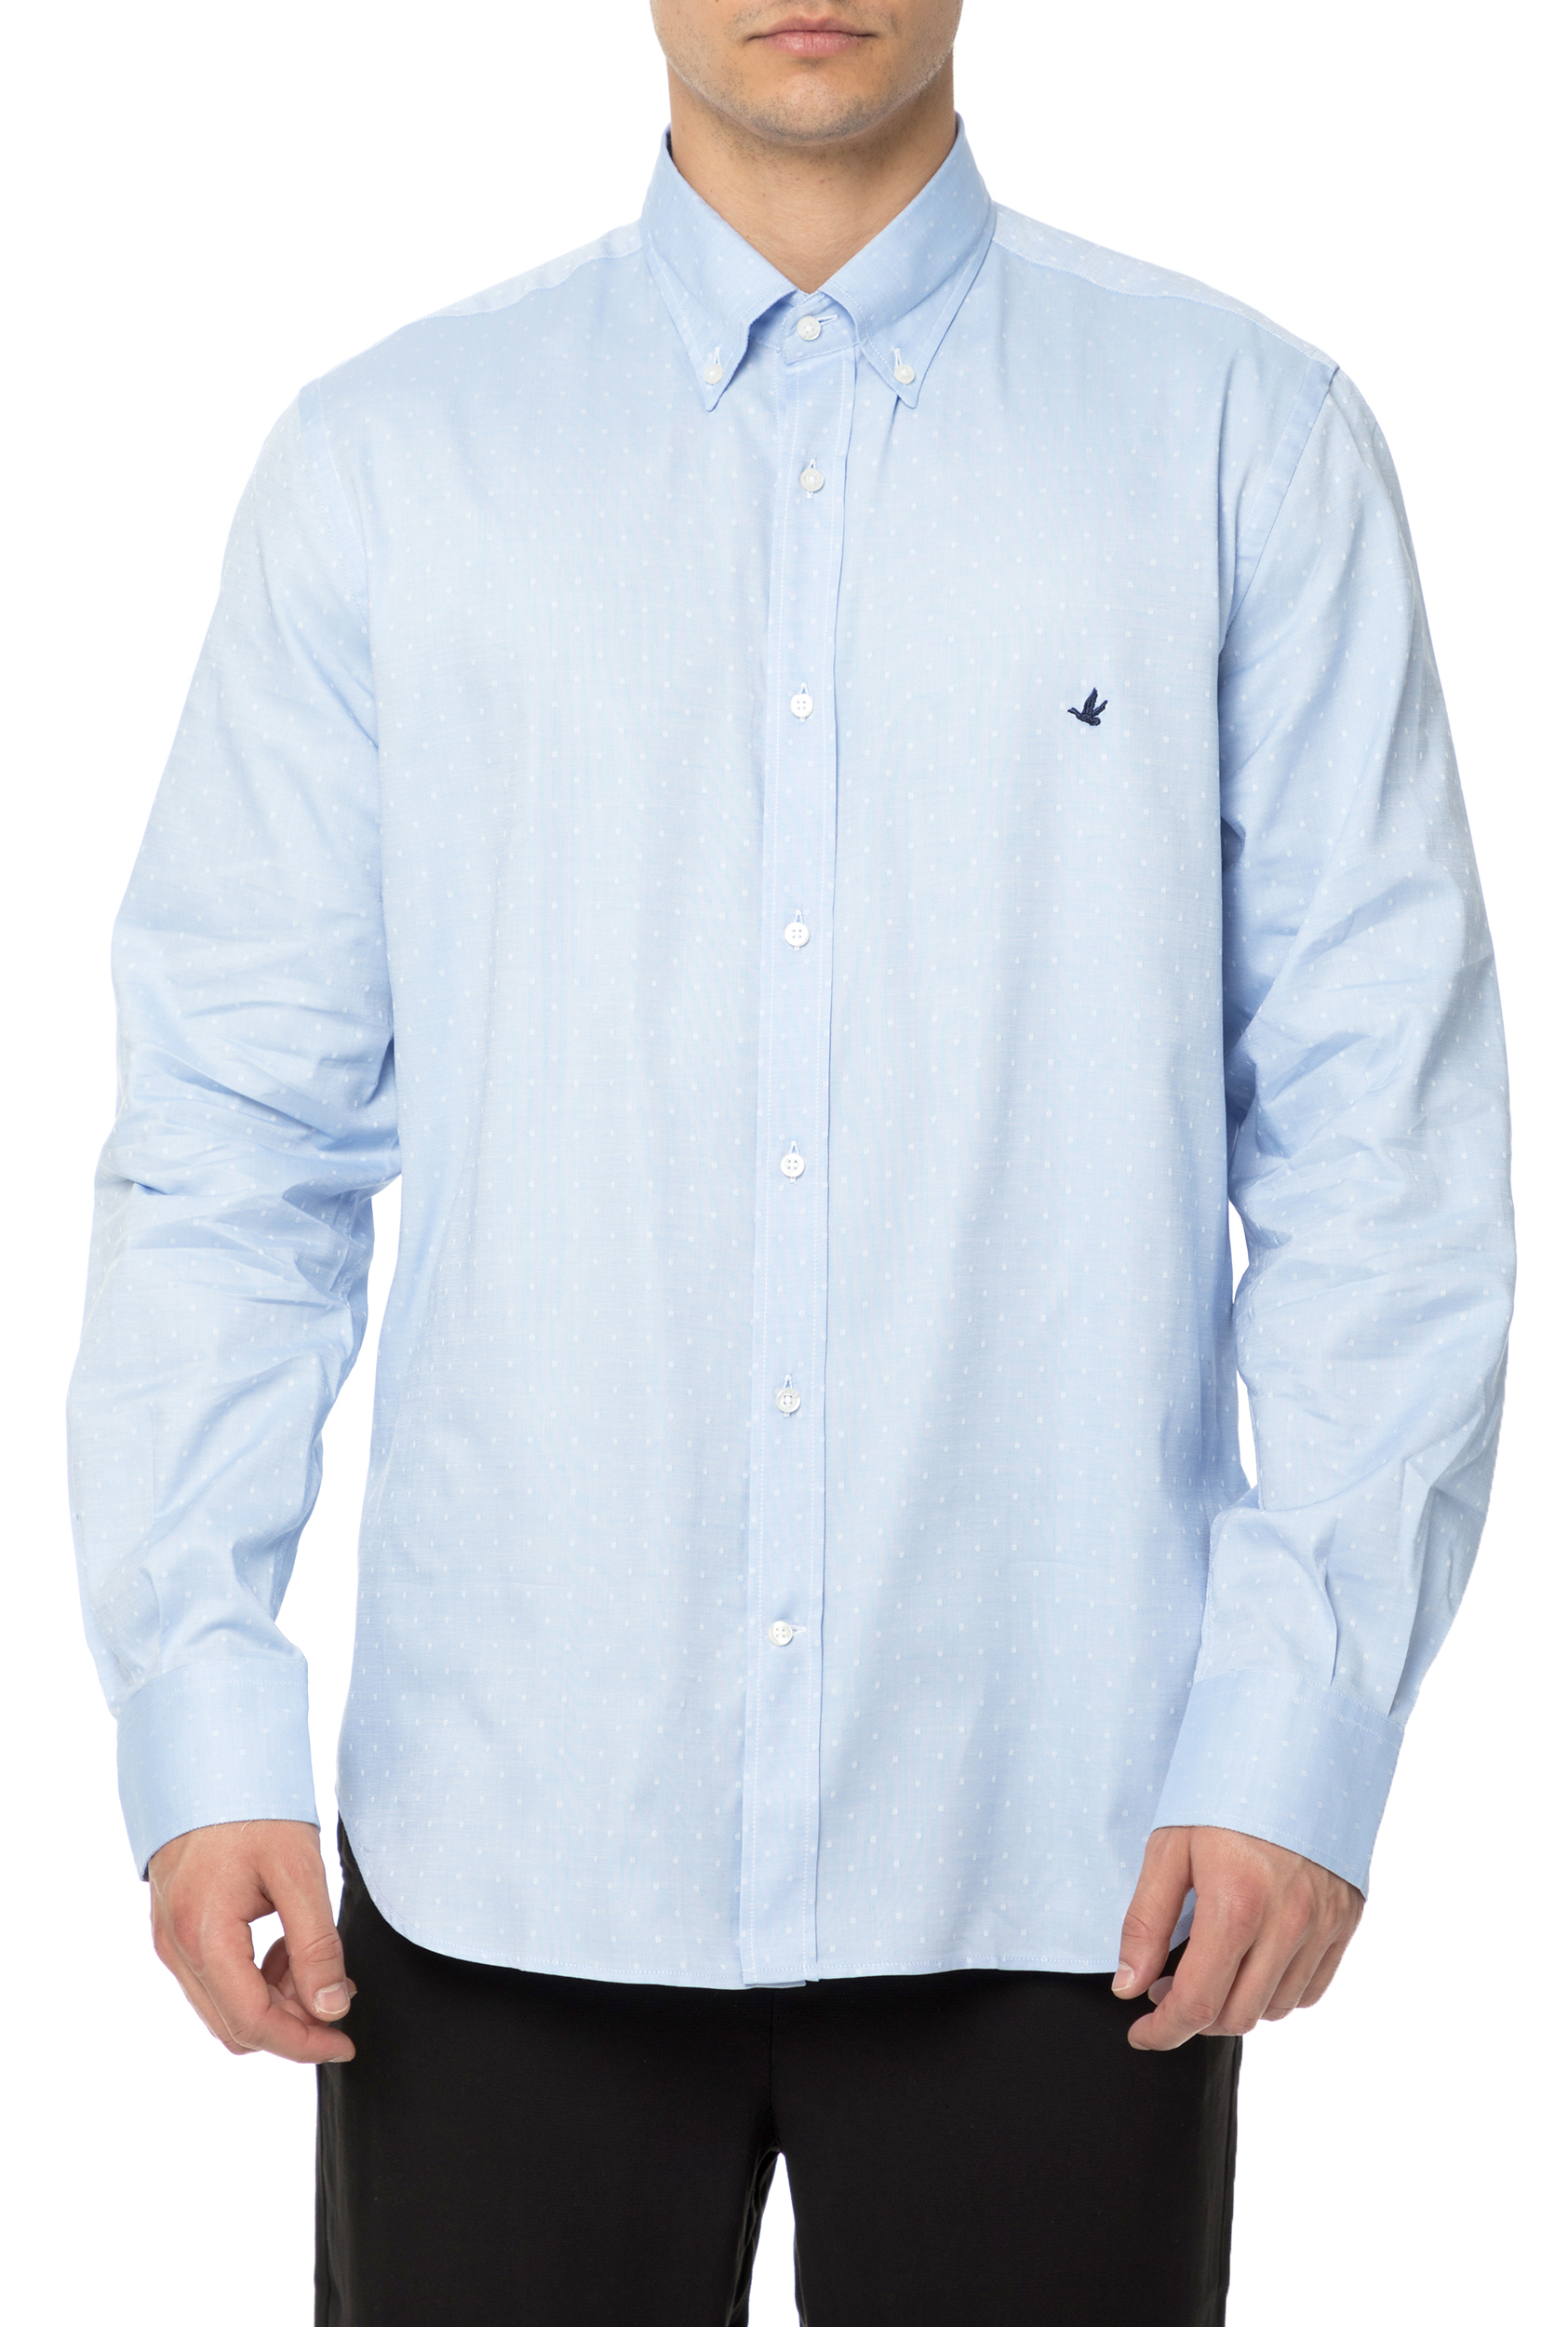 BROOKSFIELD - Ανδρικό μακρυμάνικο πουκάμισο BROOKSFIELD γαλάζιο με πουά μοτίβο Ανδρικά/Ρούχα/Πουκάμισα/Μακρυμάνικα